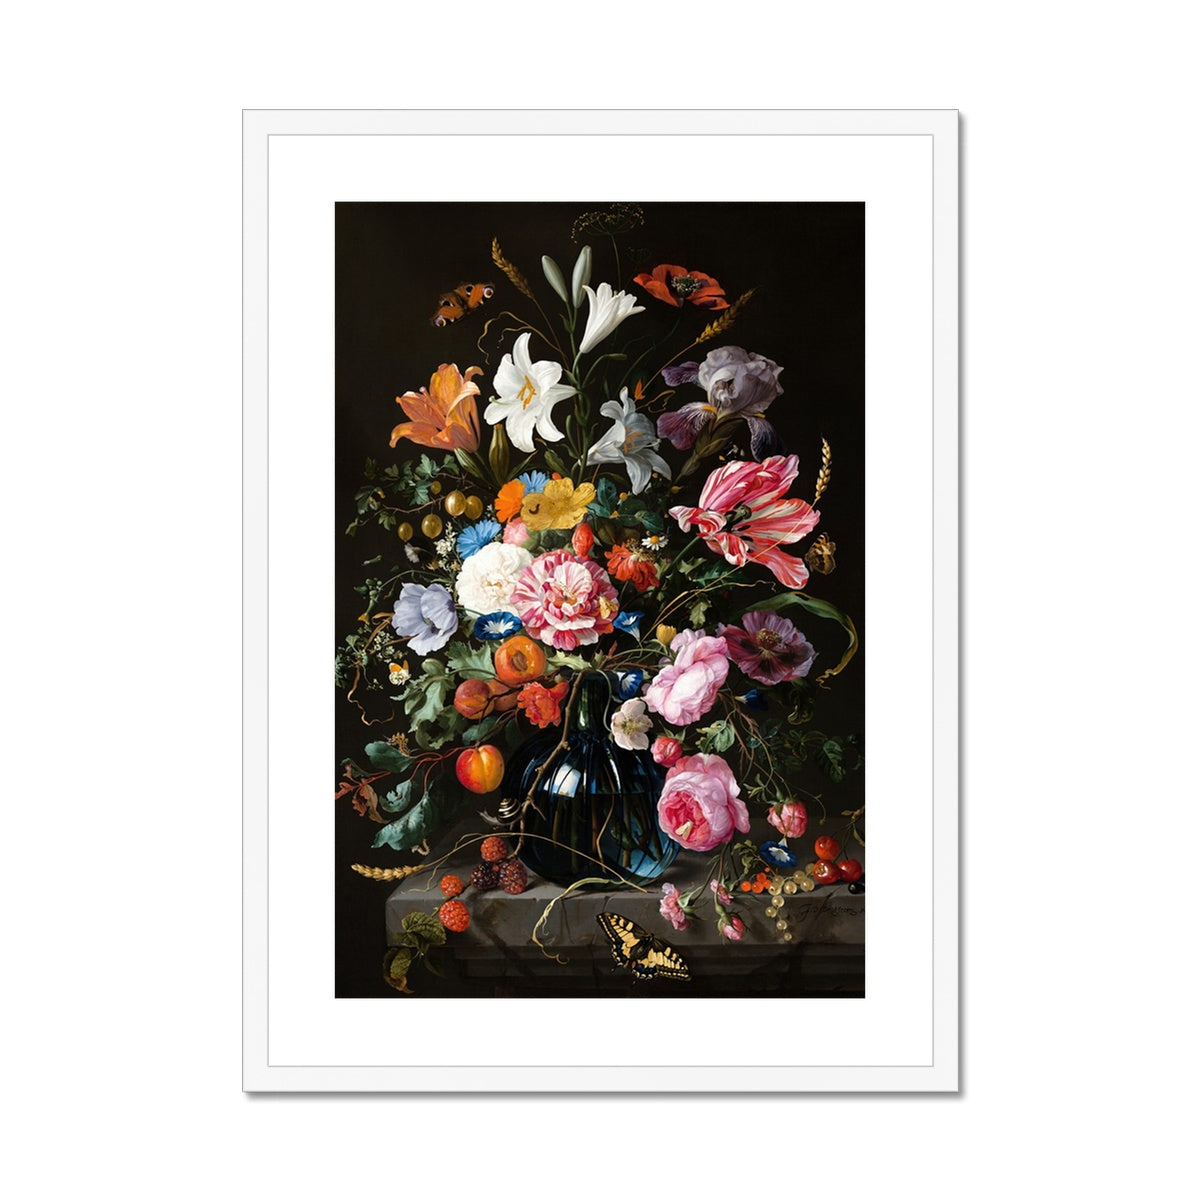 'Vase of Flowers' Still Life by Jan Davidsz de Heem. Framed Open Edition Fine Art Print. Historic Art